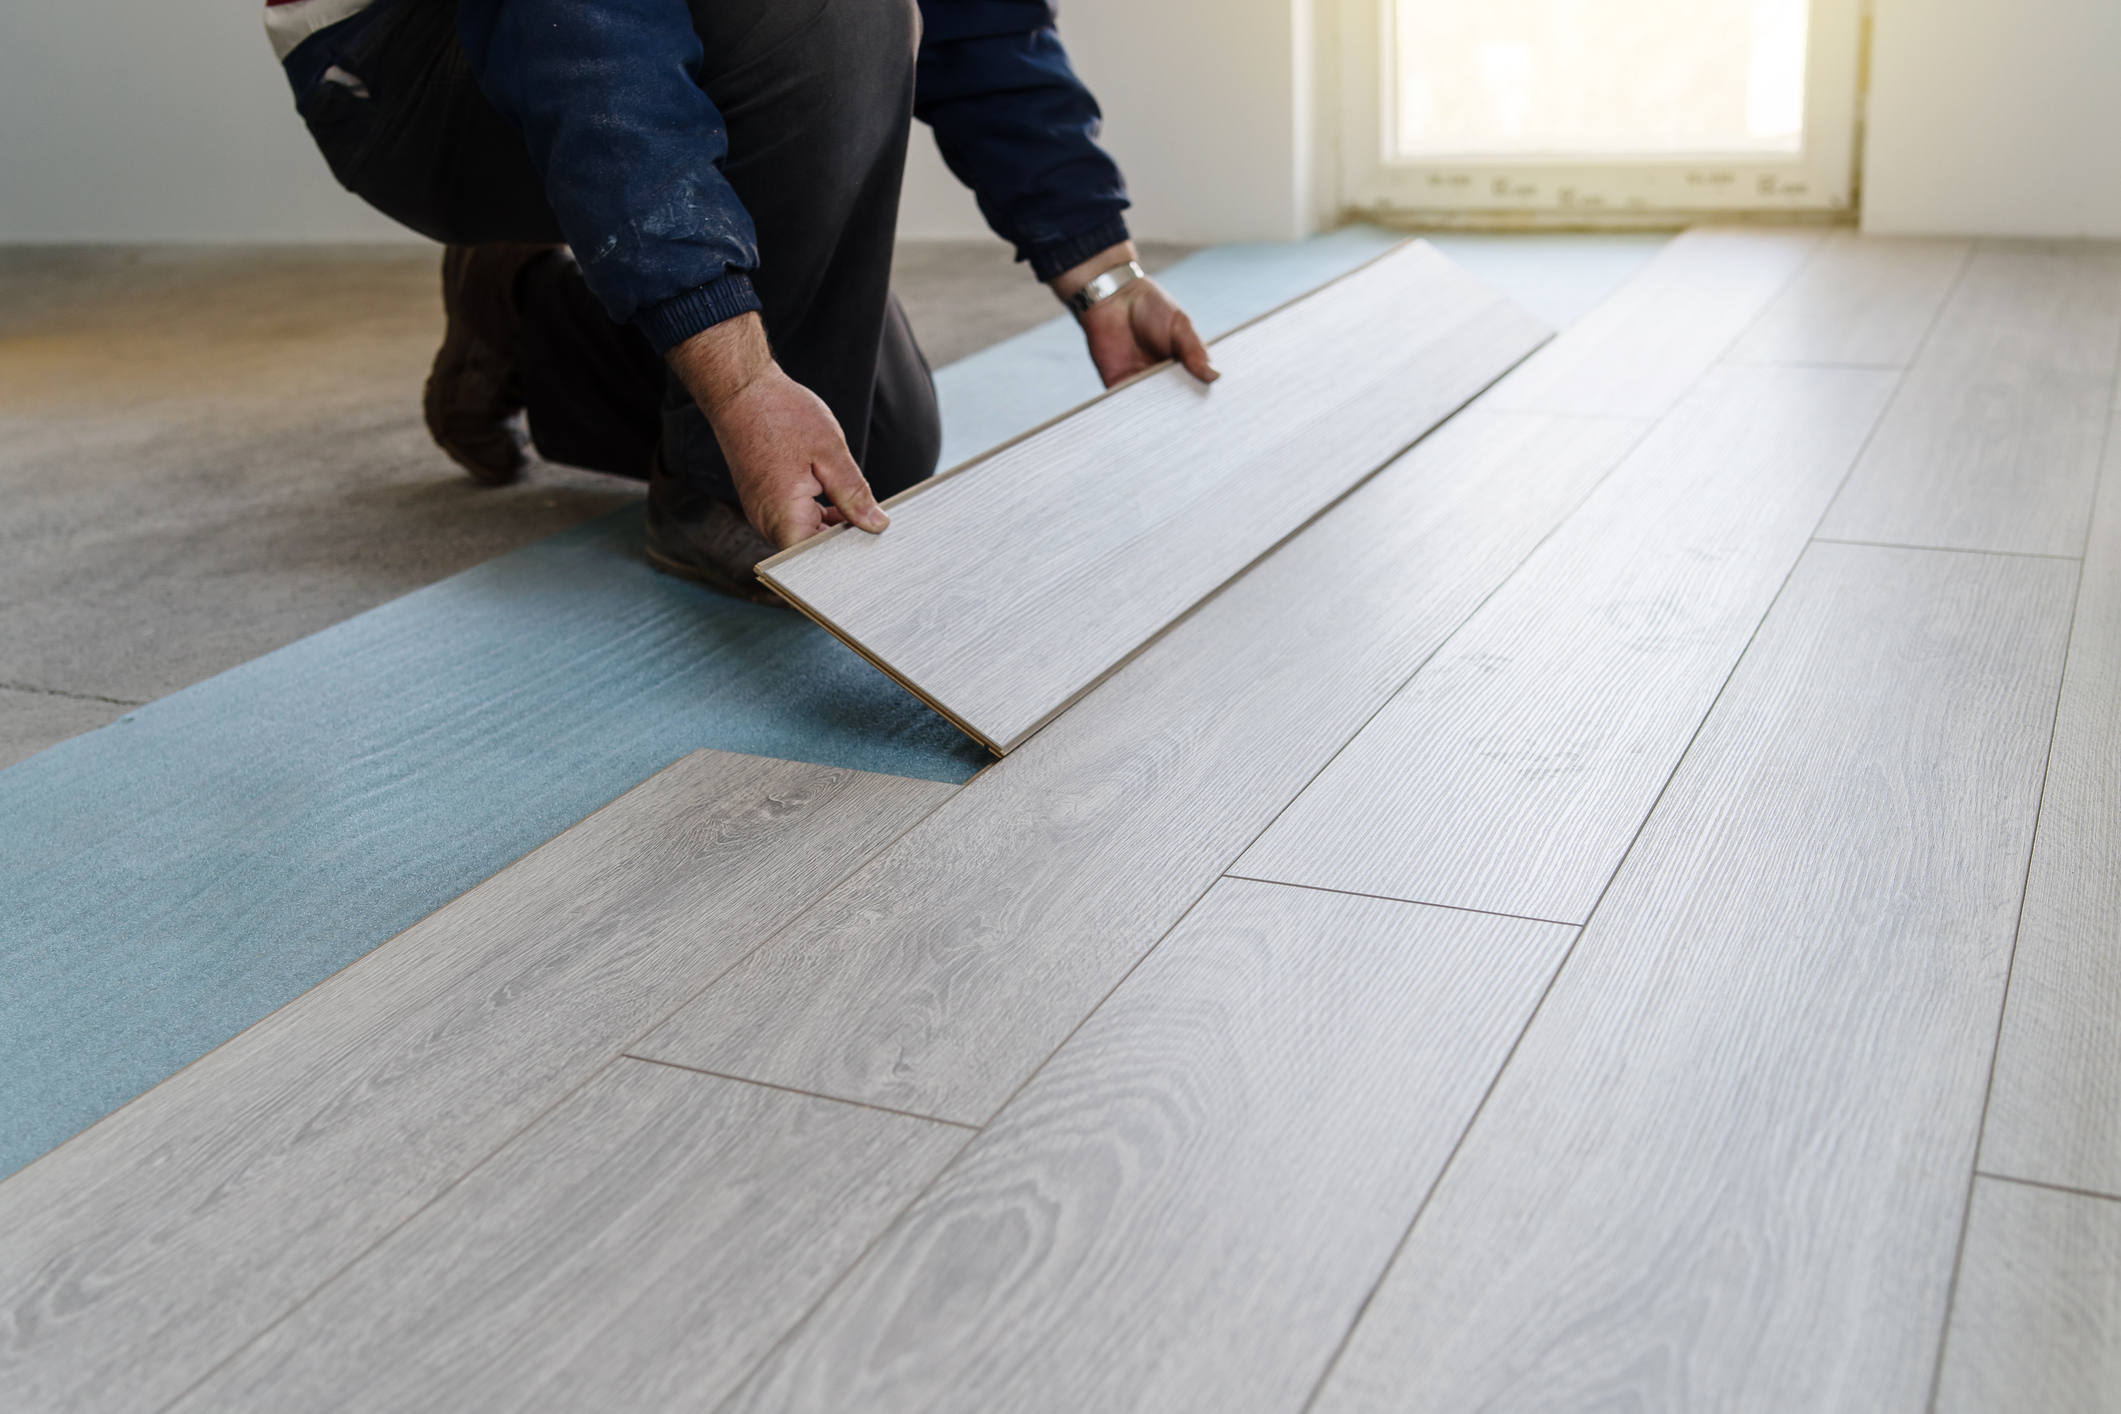 Temporary Flooring Ideas, Can You Lay Laminate Flooring On Top Of Vinyl Flooring